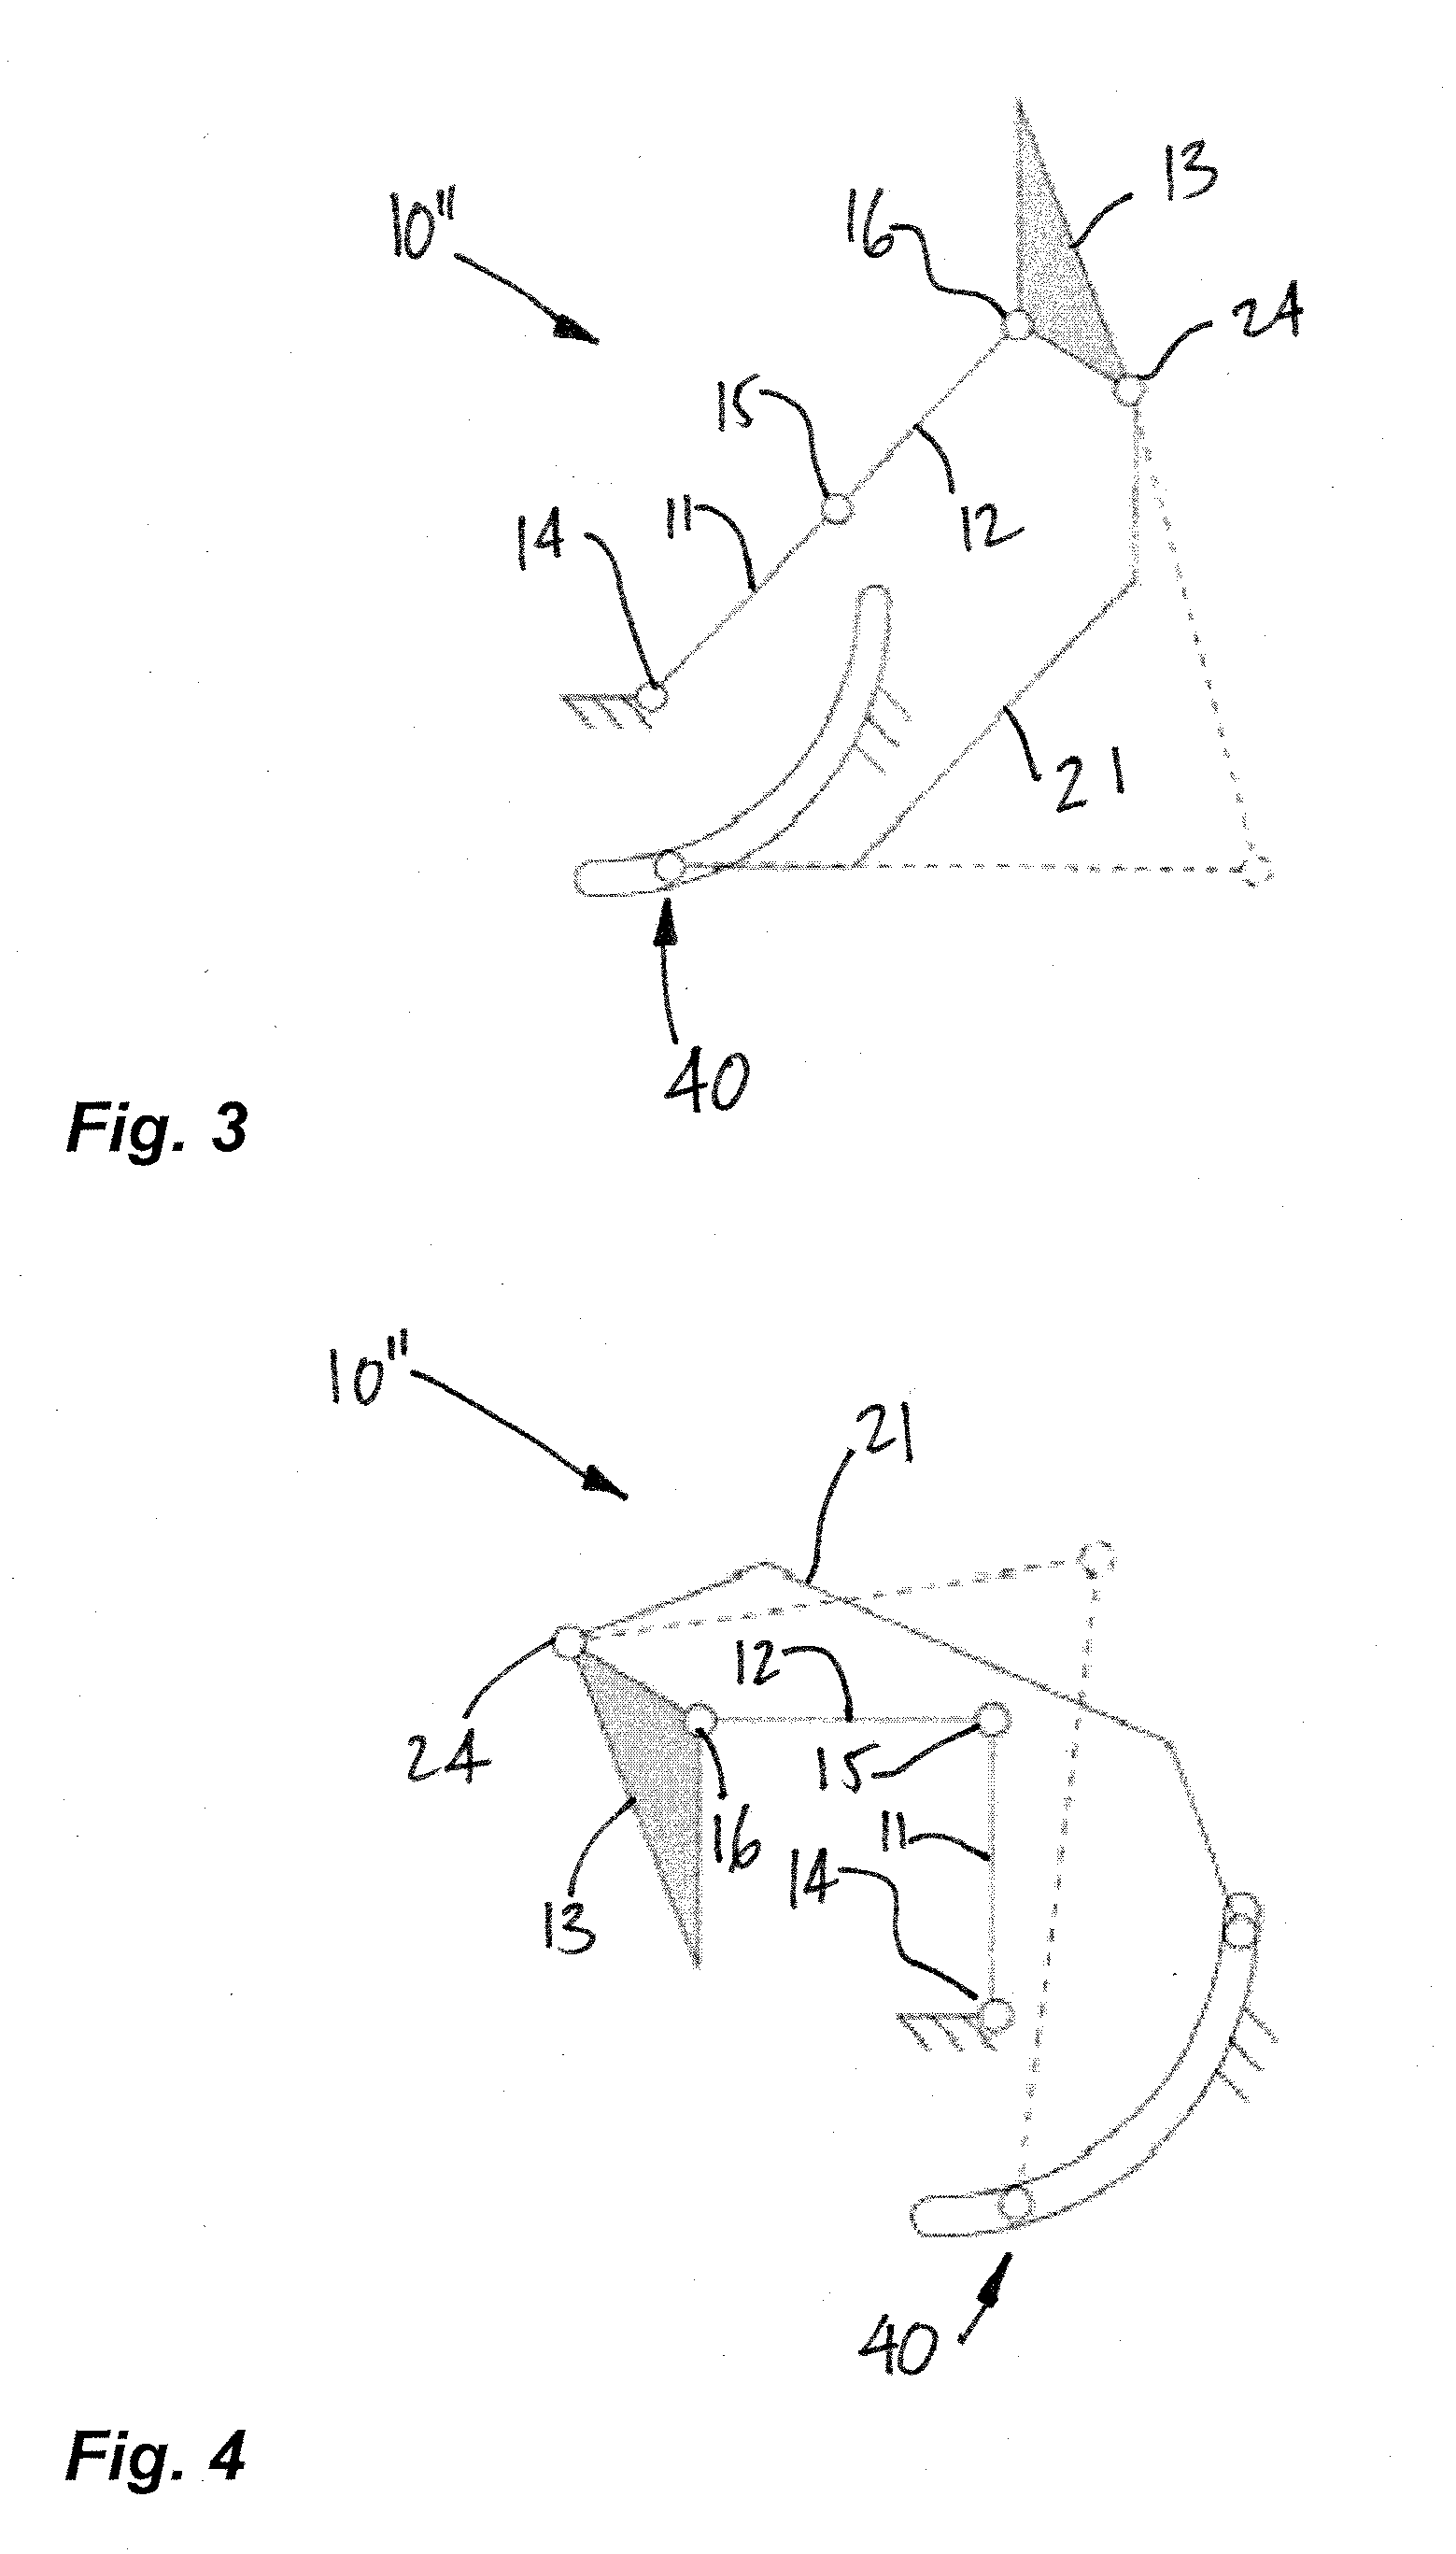 Self-adaptive mechanical finger and method